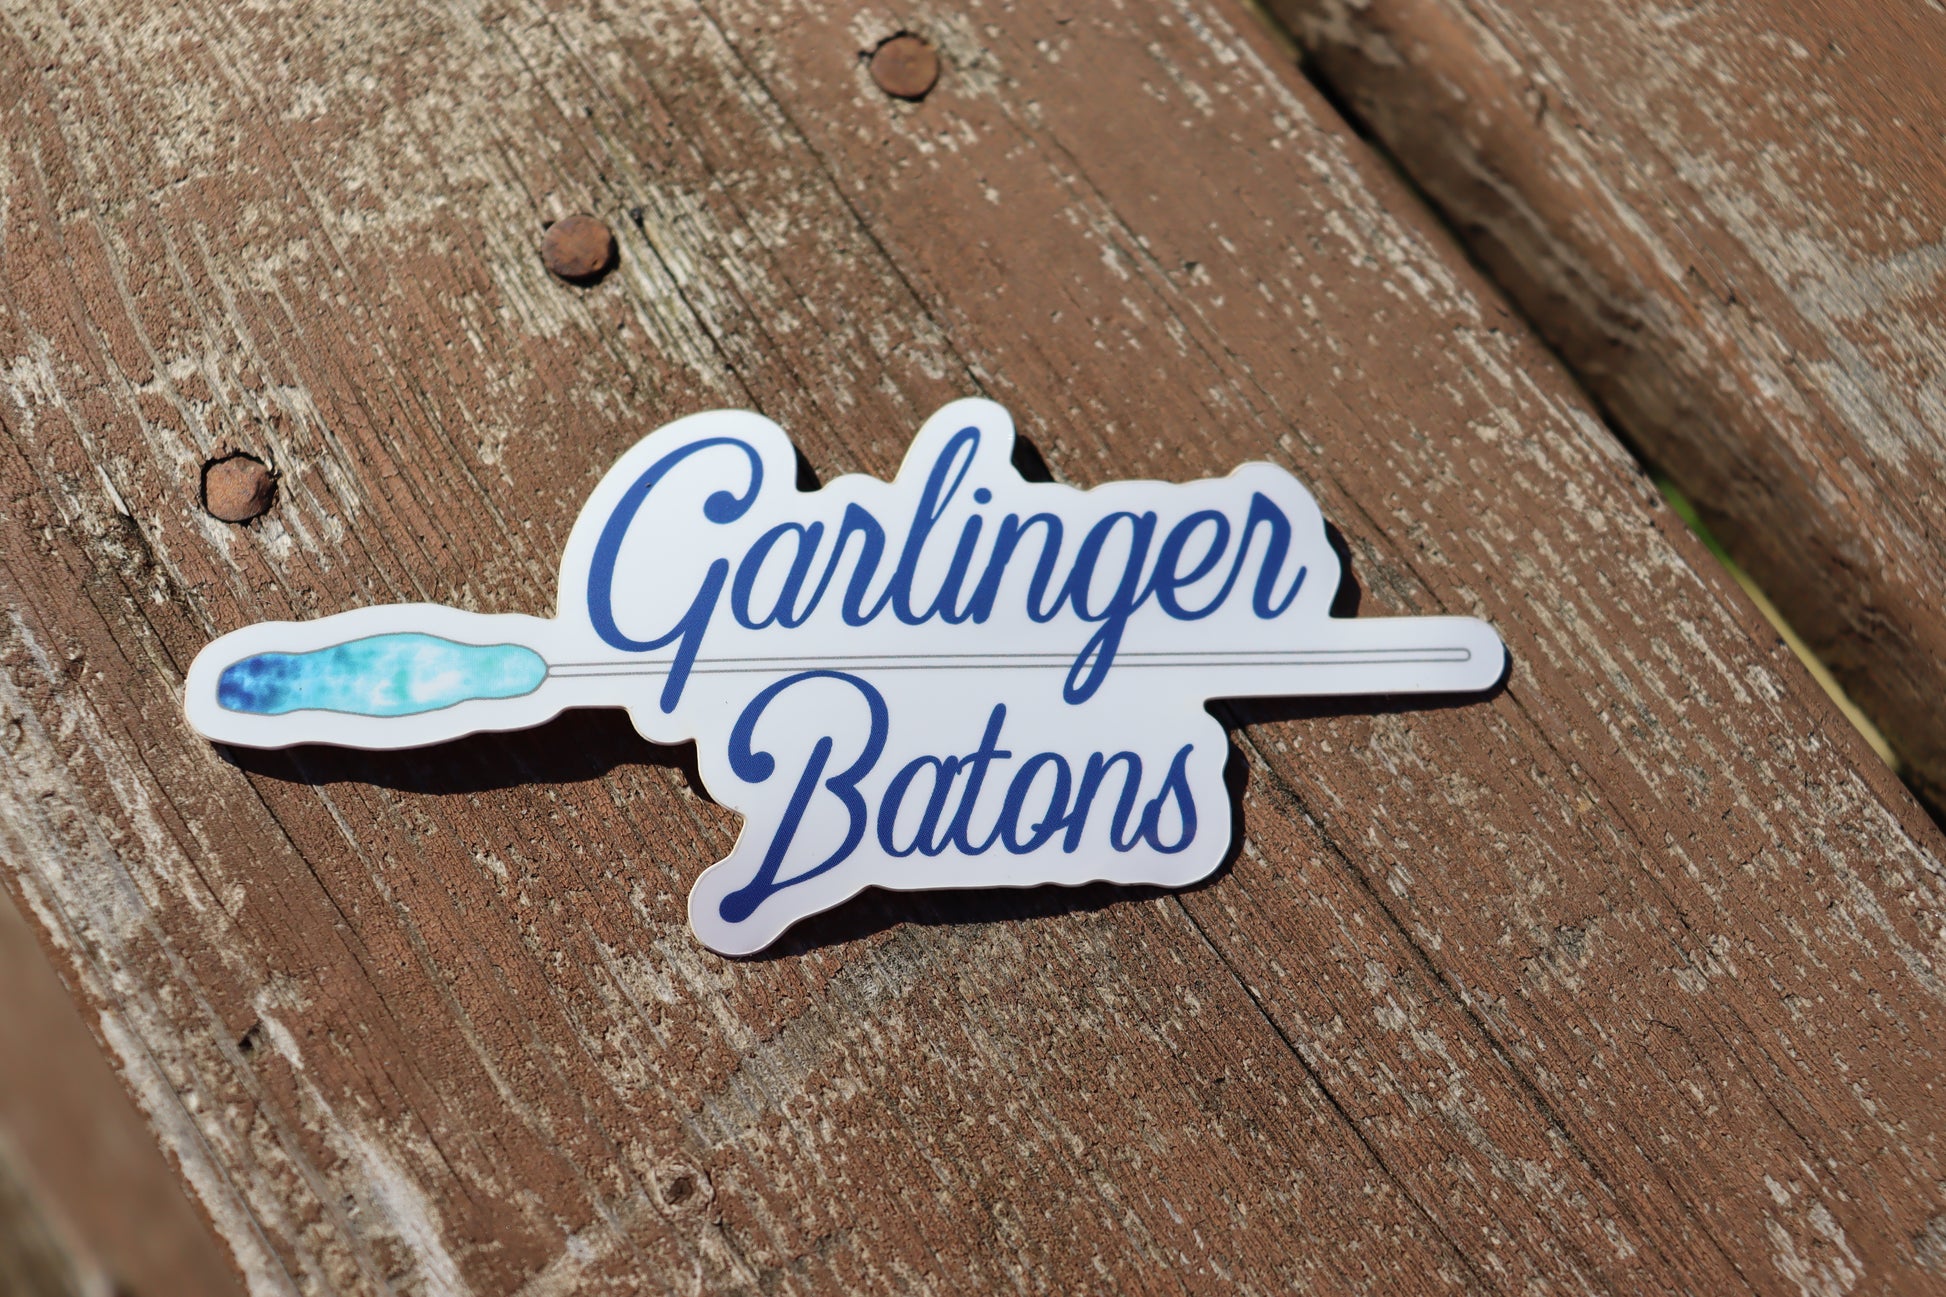 Garlinger Batons Logo Sticker